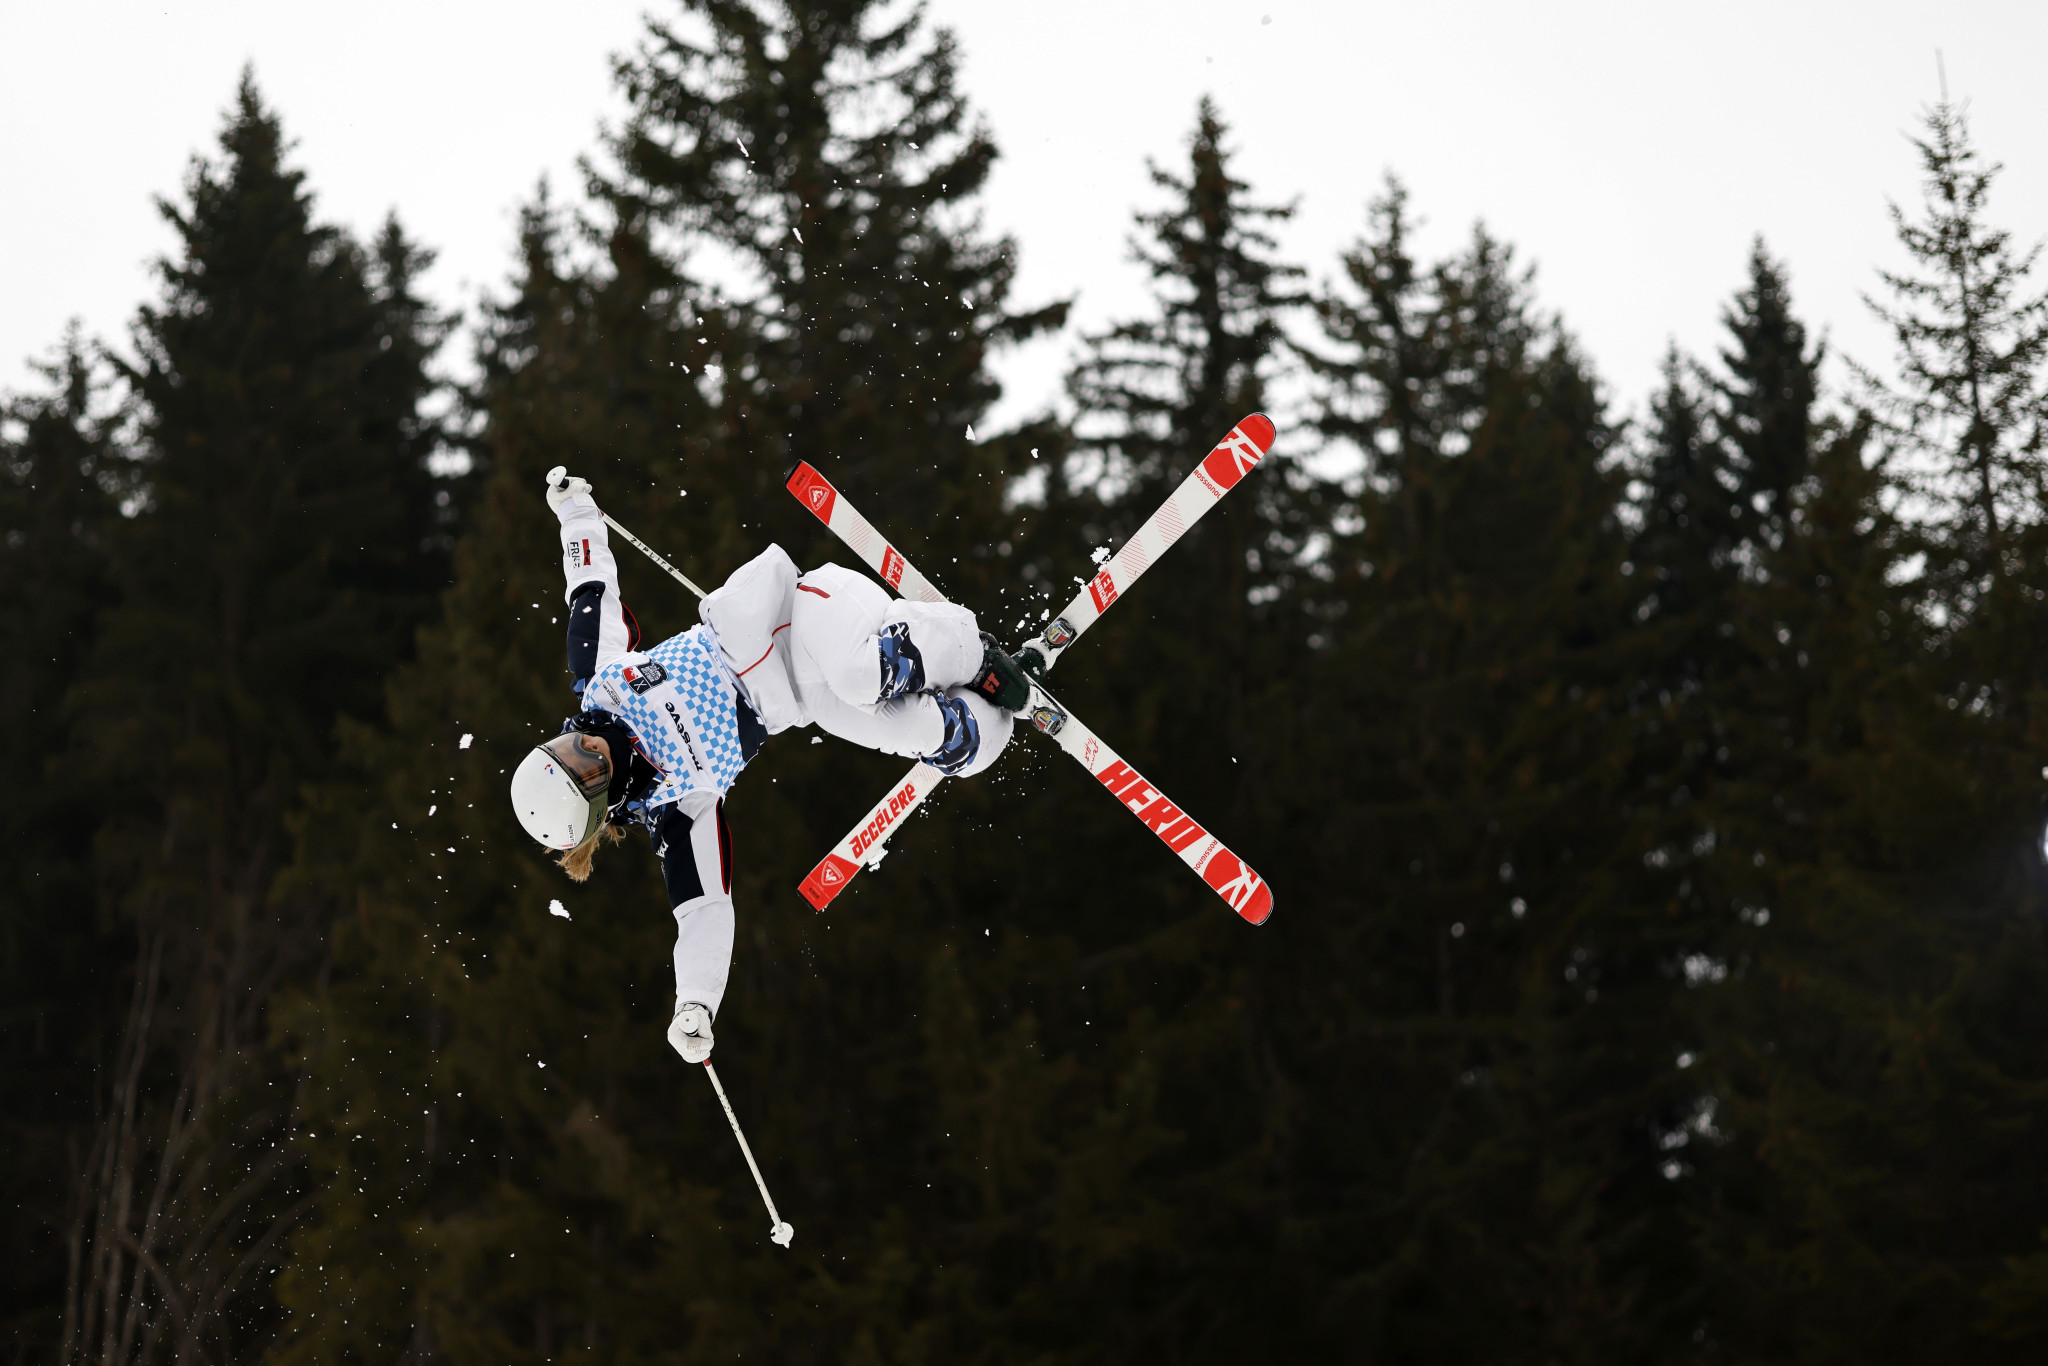 Chiesa in Valmalenco to host FIS Freestyle Ski Junior World Championships